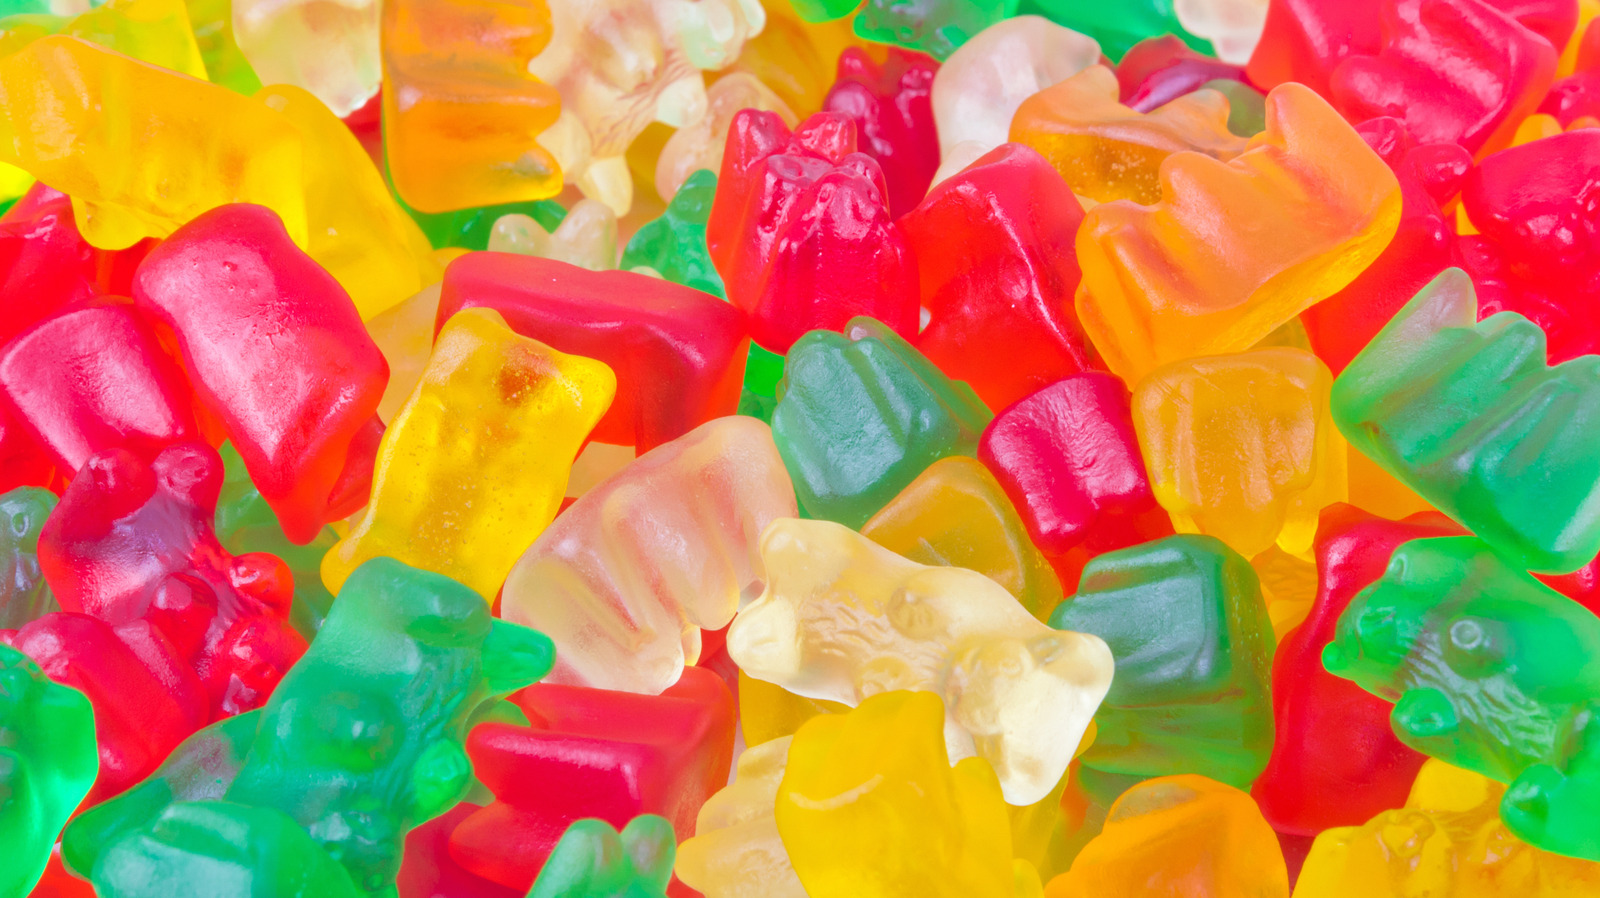 Gummy Bears - The Hampton Popcorn Company